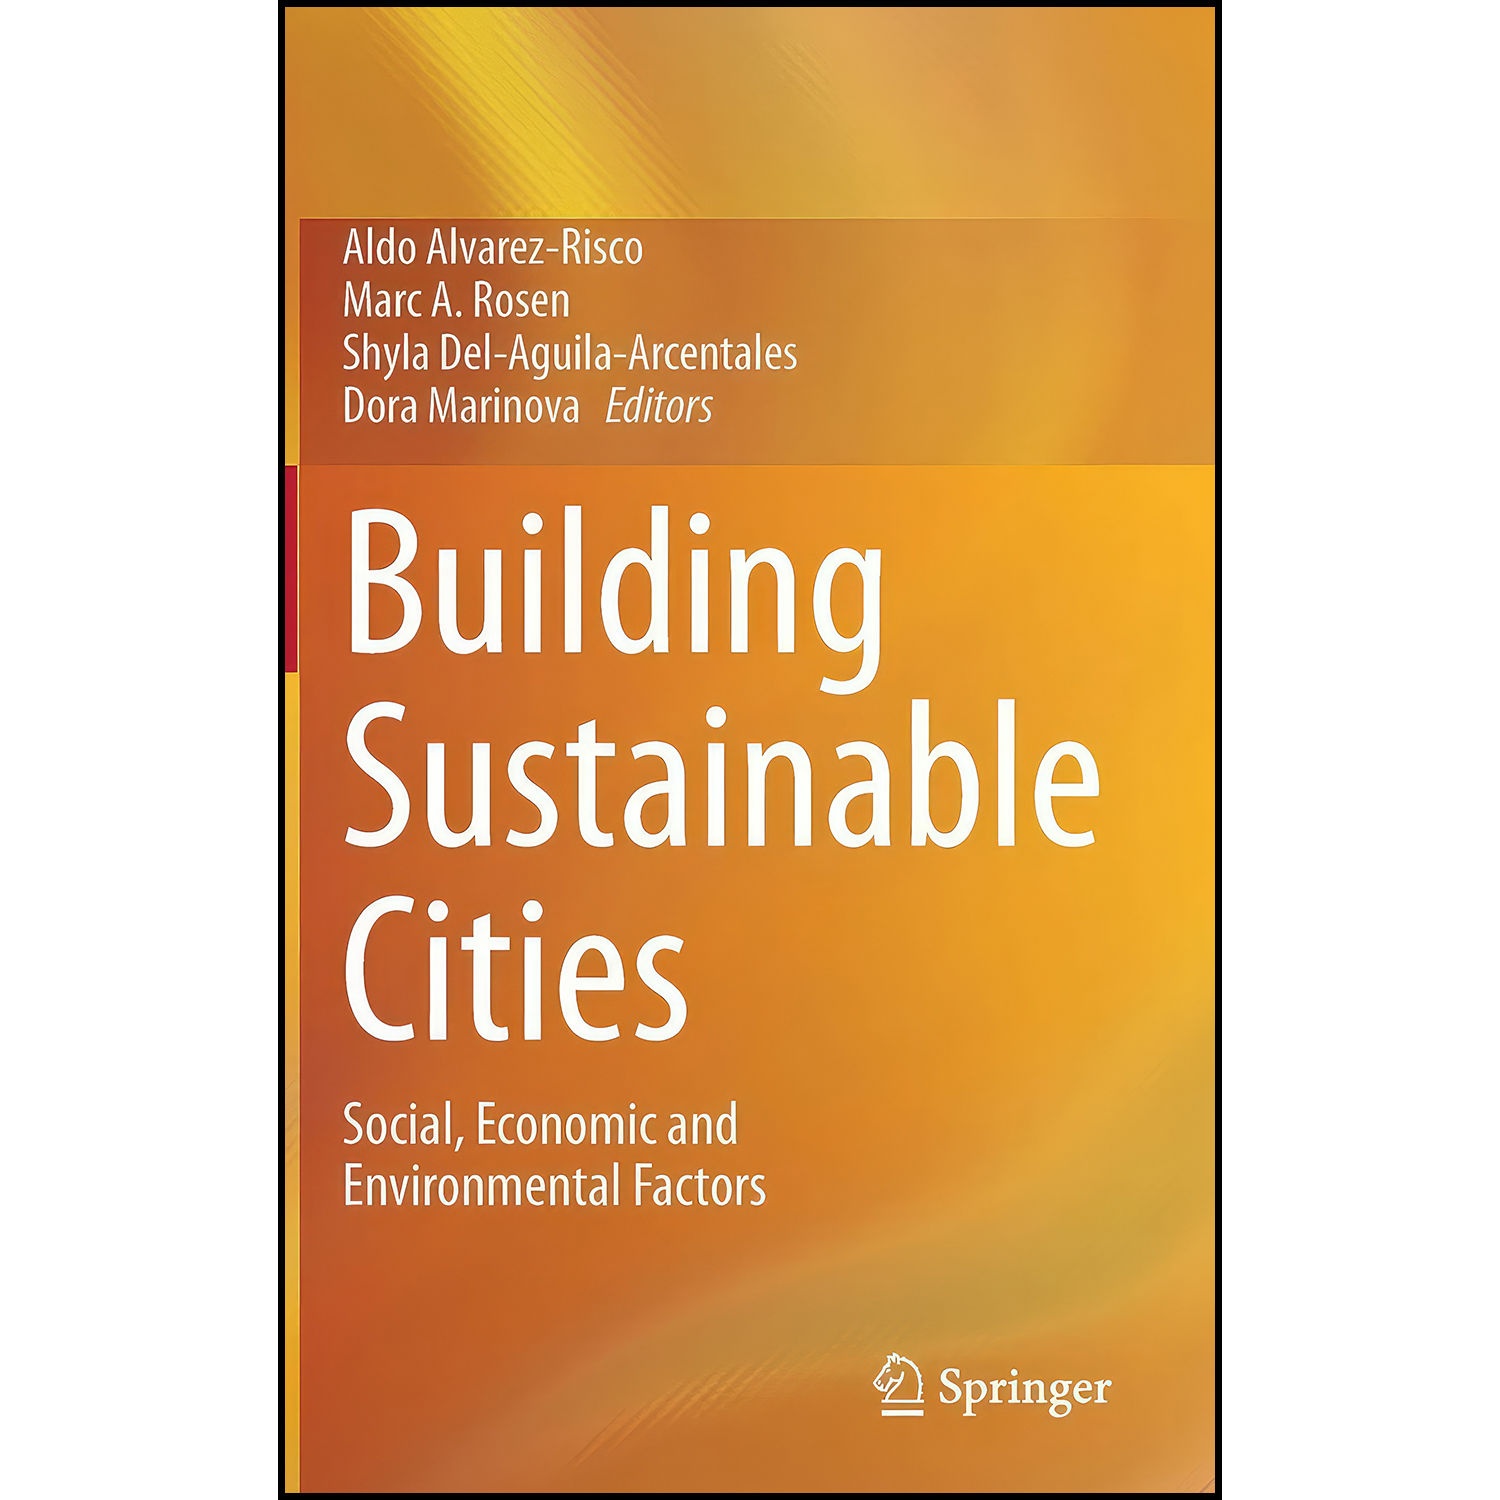 کتاب Building Sustainable Cities اثر جمعي از نويسندگان انتشارات Springer